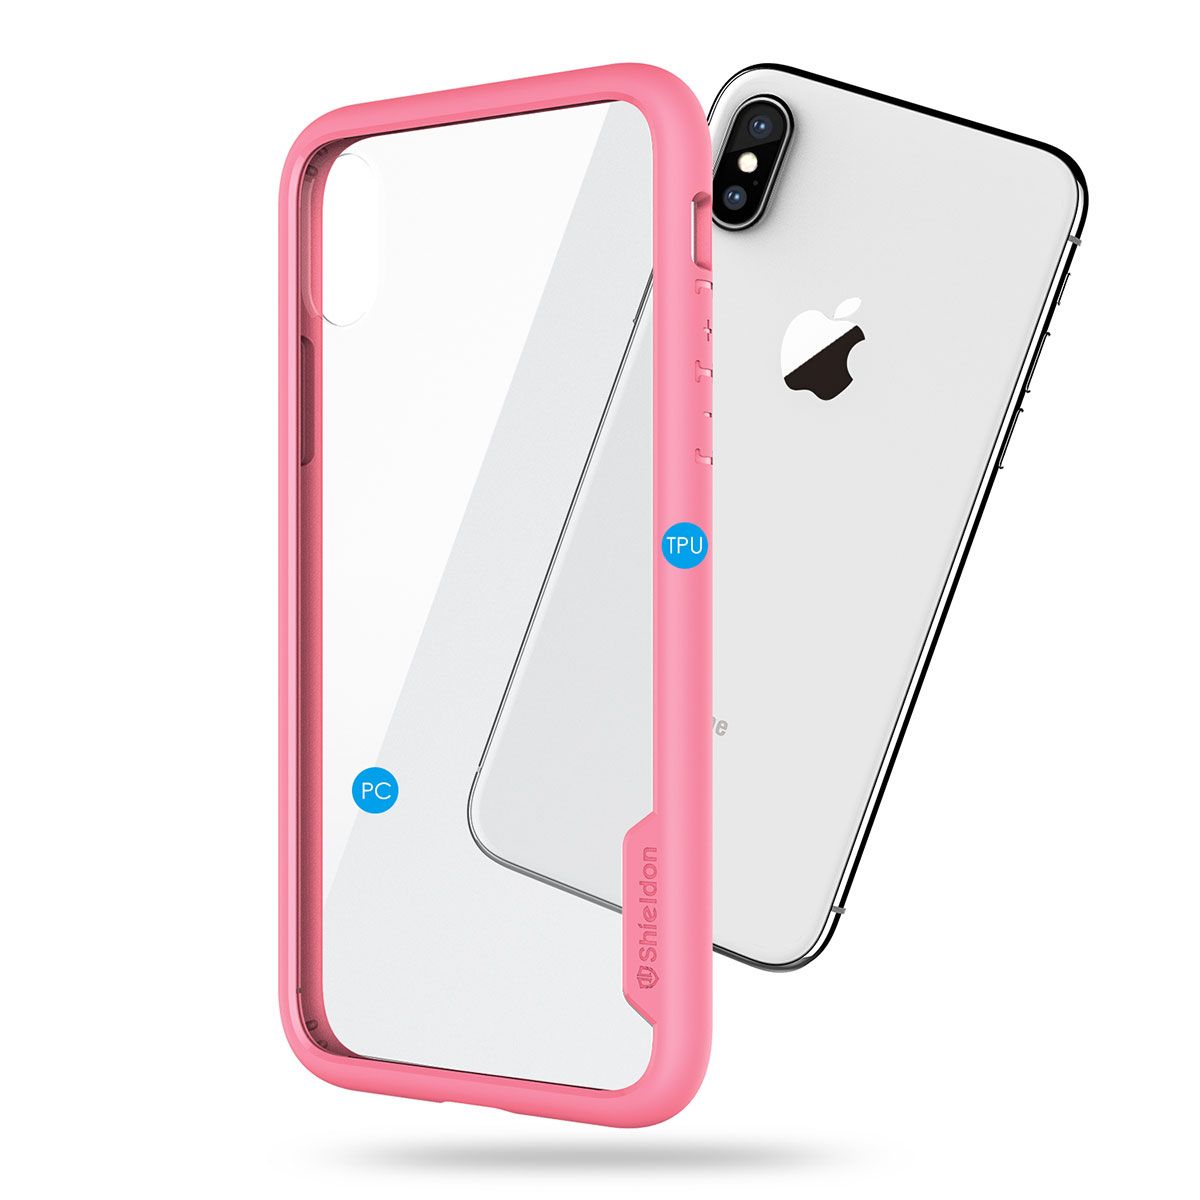 Protector De Pantalla Apple Iphone 4 Pink/white Bumper Case 